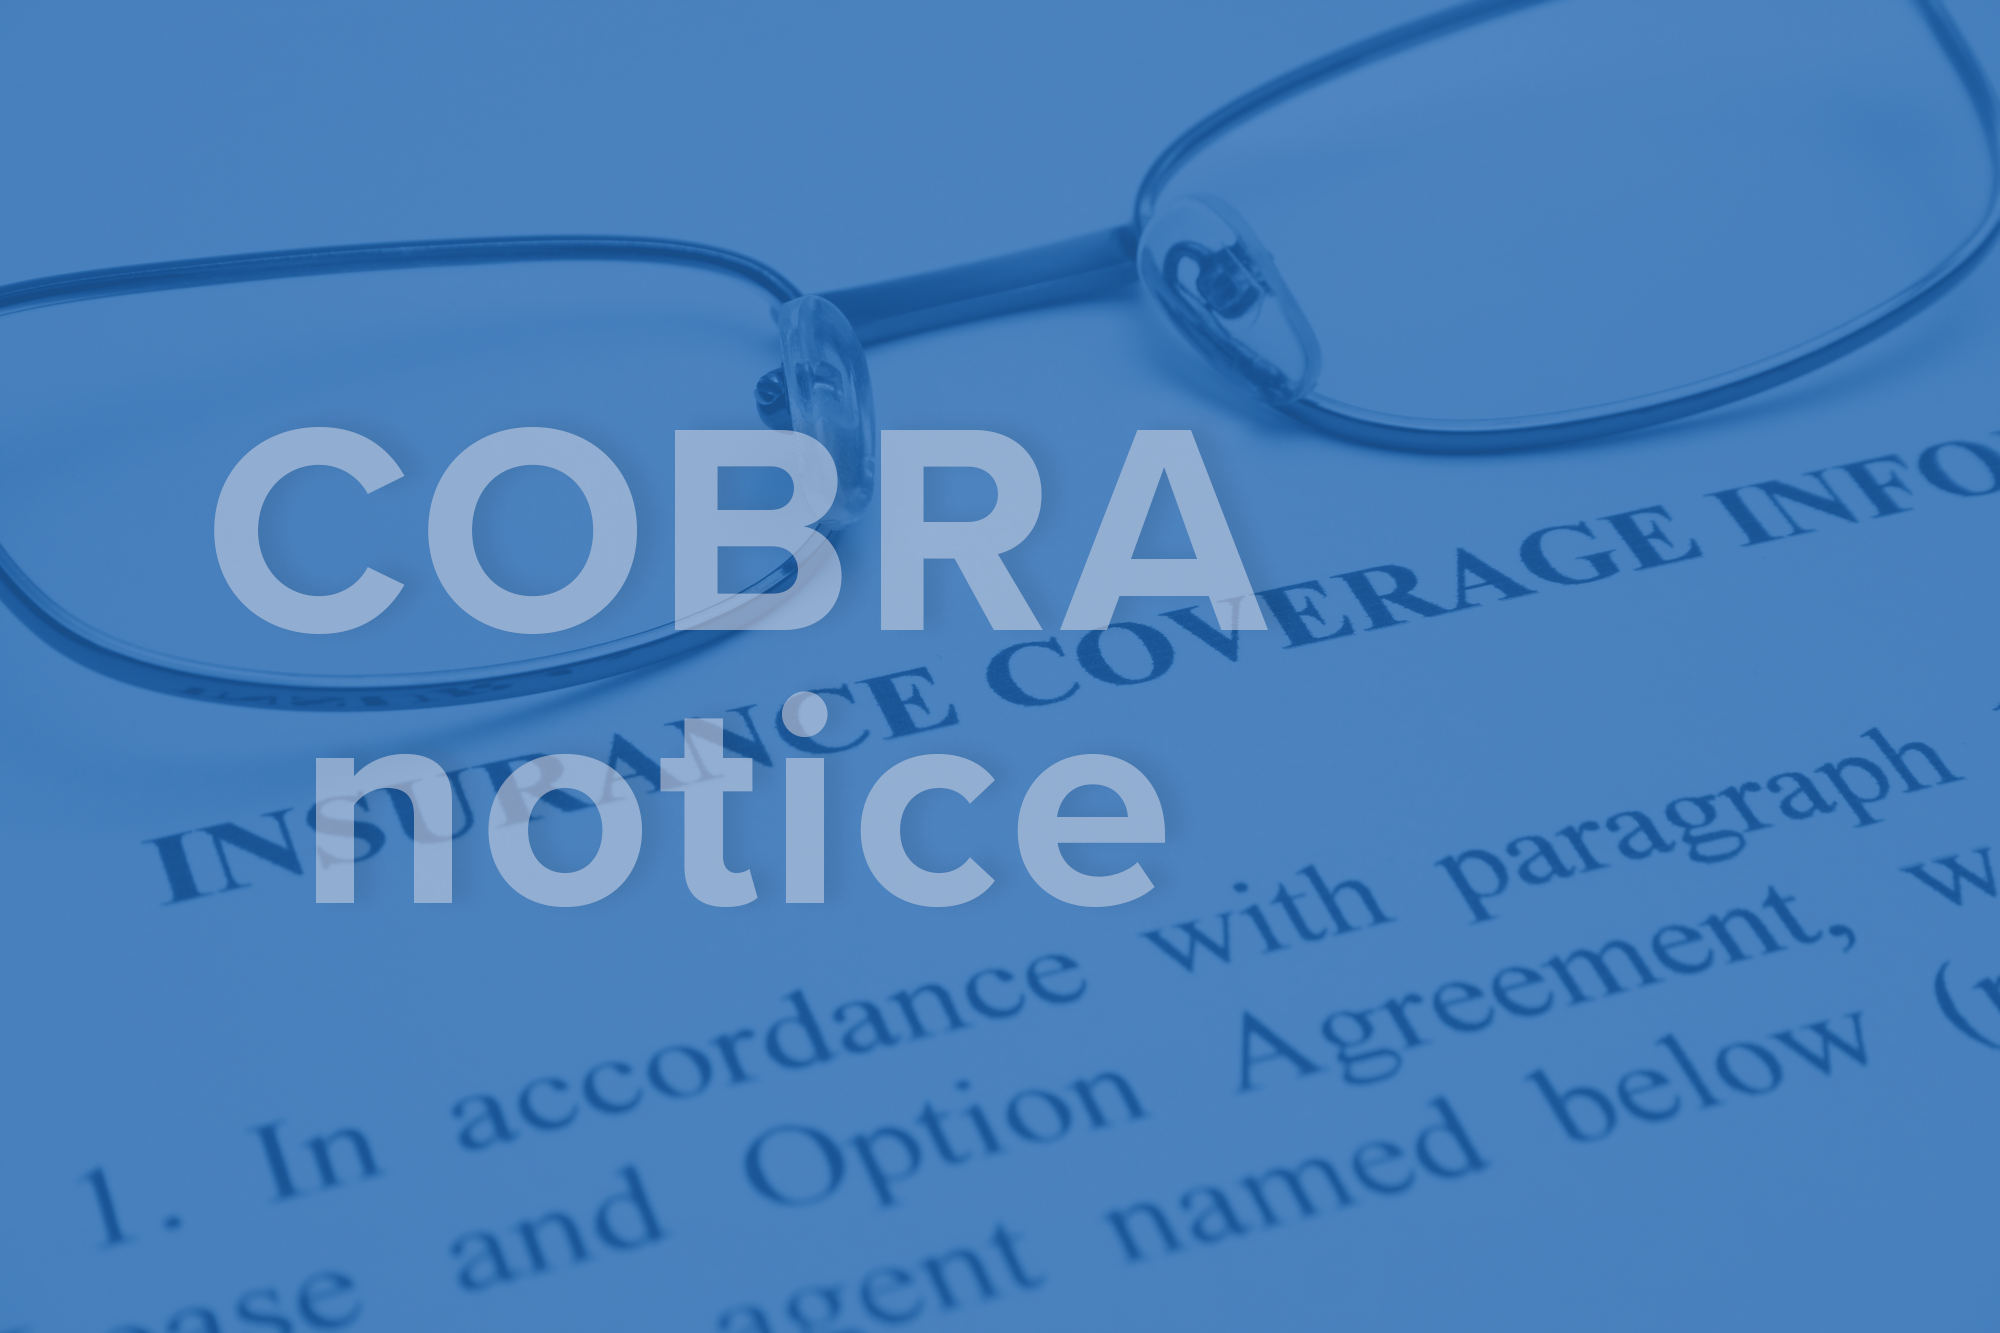 New Model COBRA Notice Released - MyHRConcierge